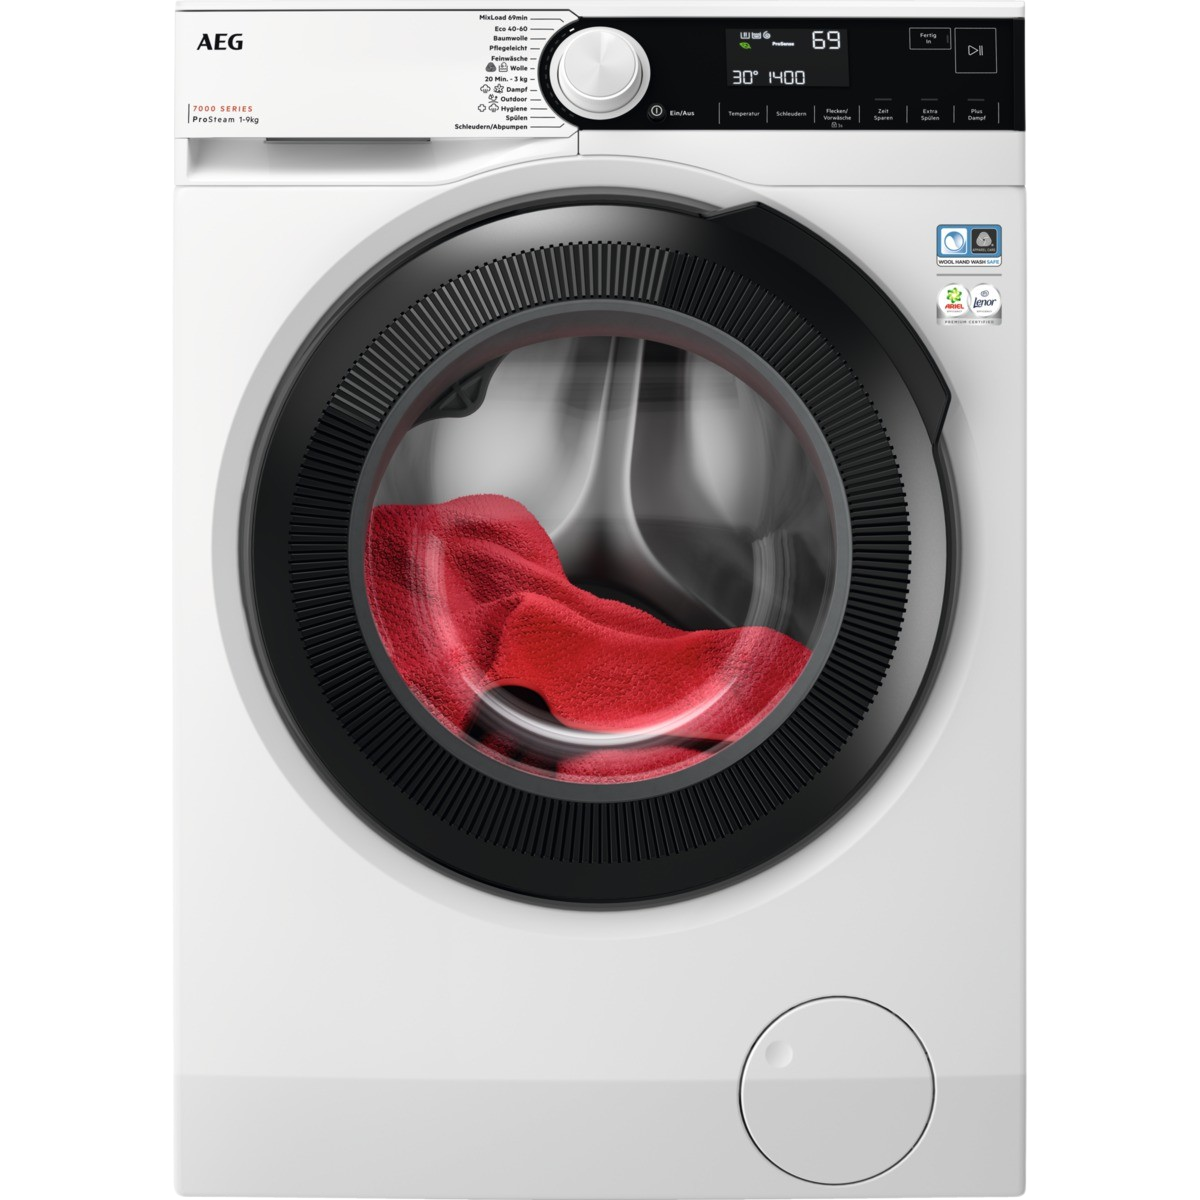 from iQ500 Washing WG44G2040 €34.90 Machine Siemens per Rent month